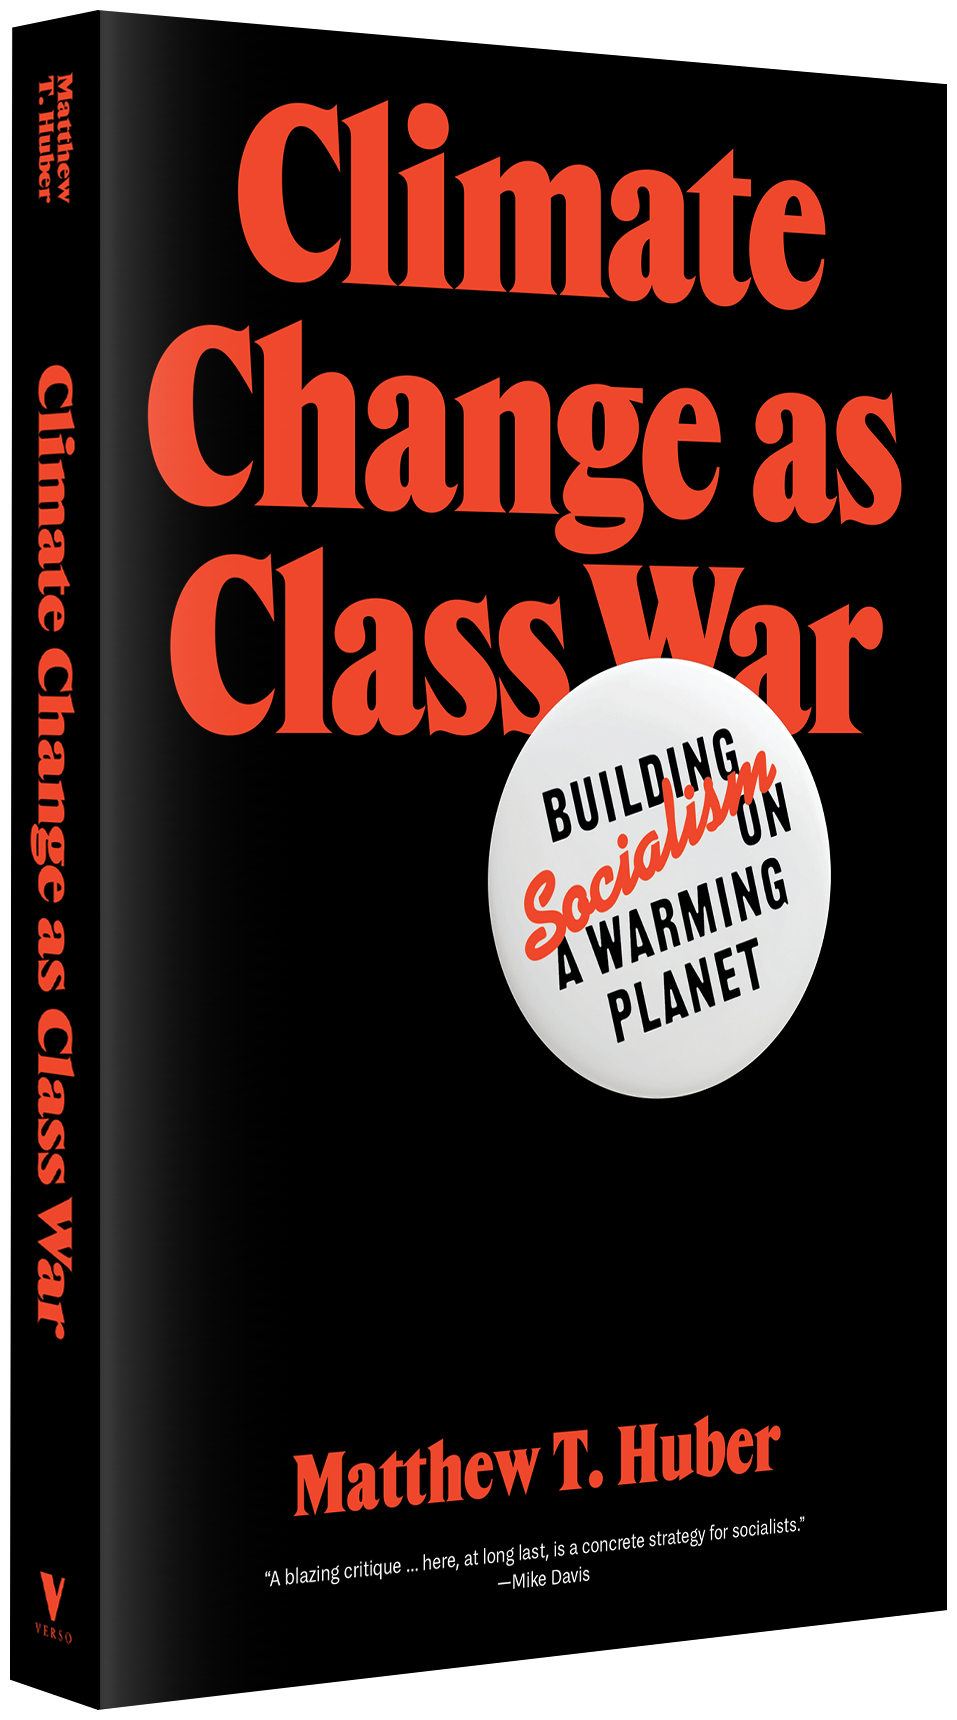 Climate-change-as-class-war